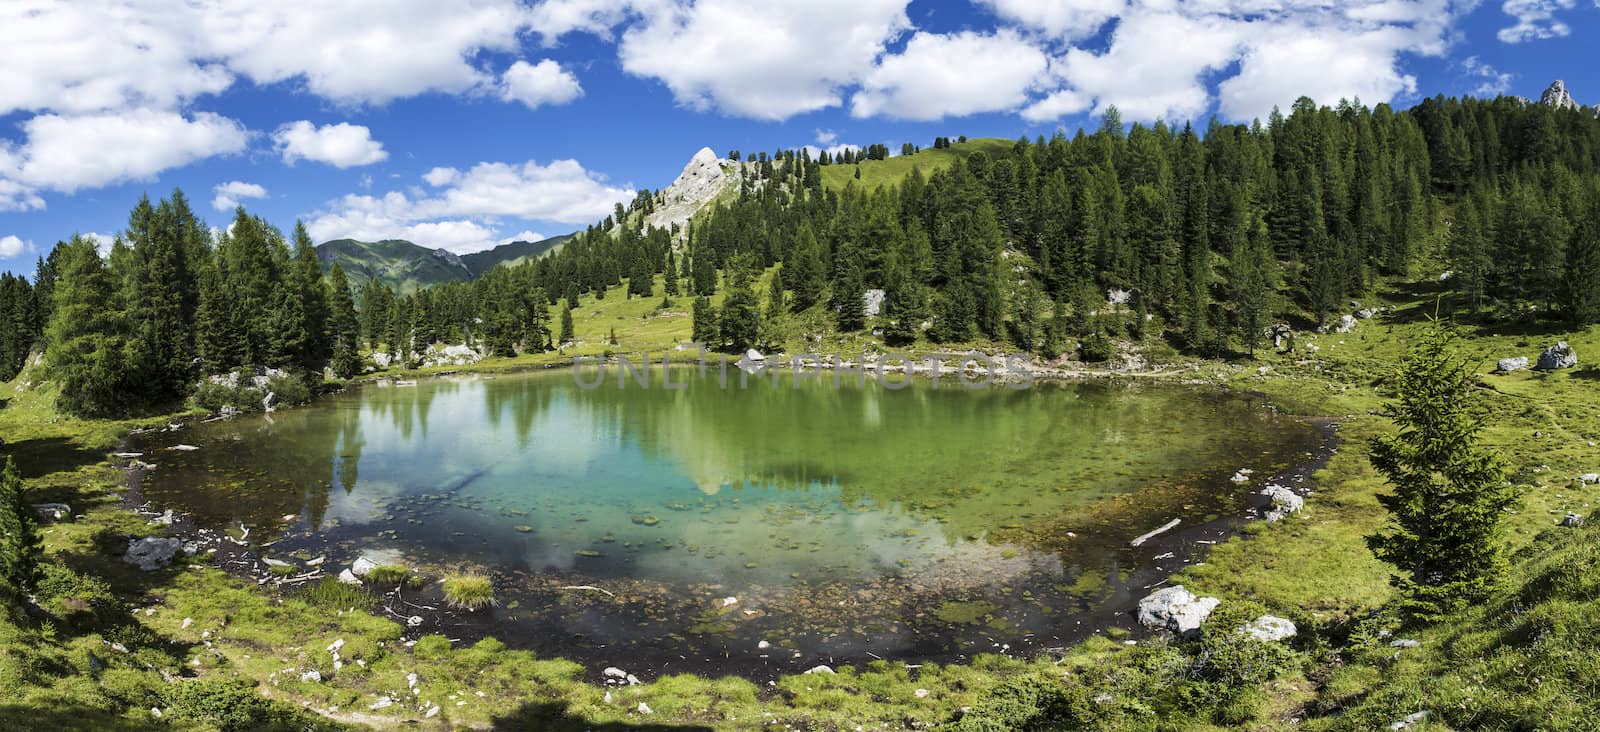 Panoramic view of the Lagusel Lake in Trentino-Alto Adige Dolomites - Italy